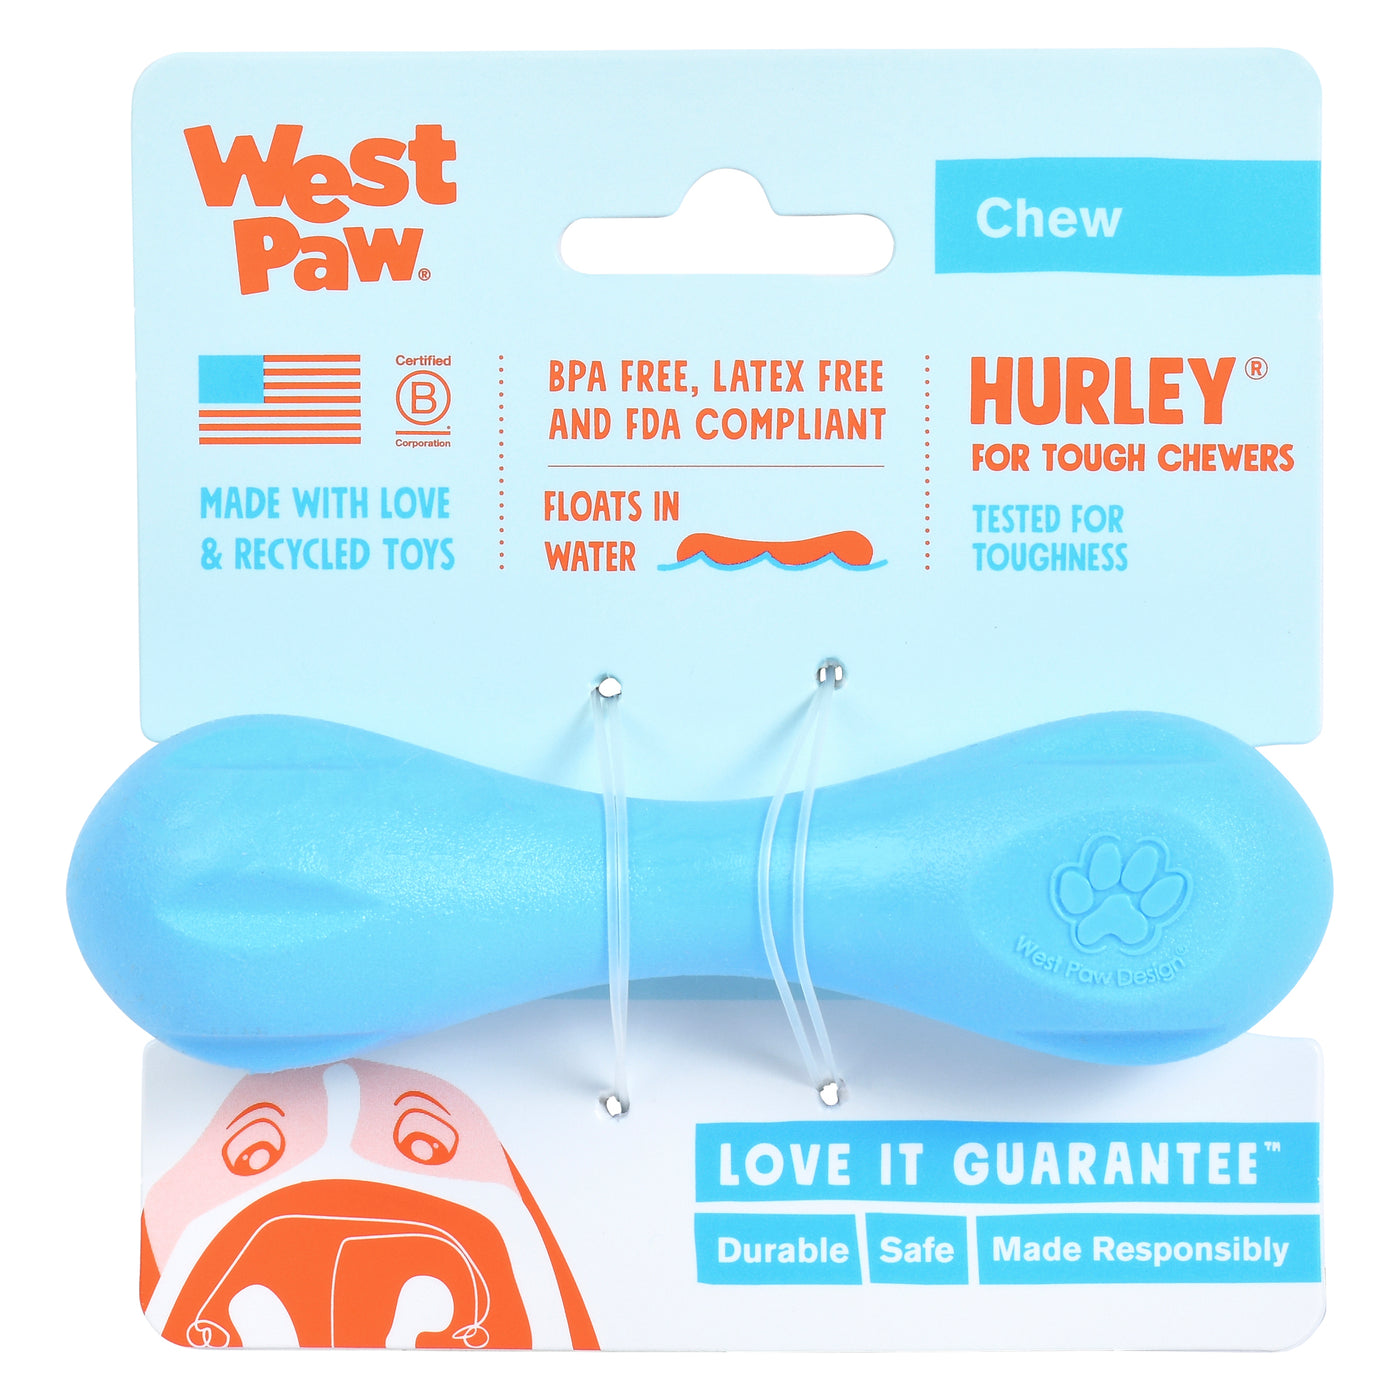 West Paw Hurley Dog Bone Toy